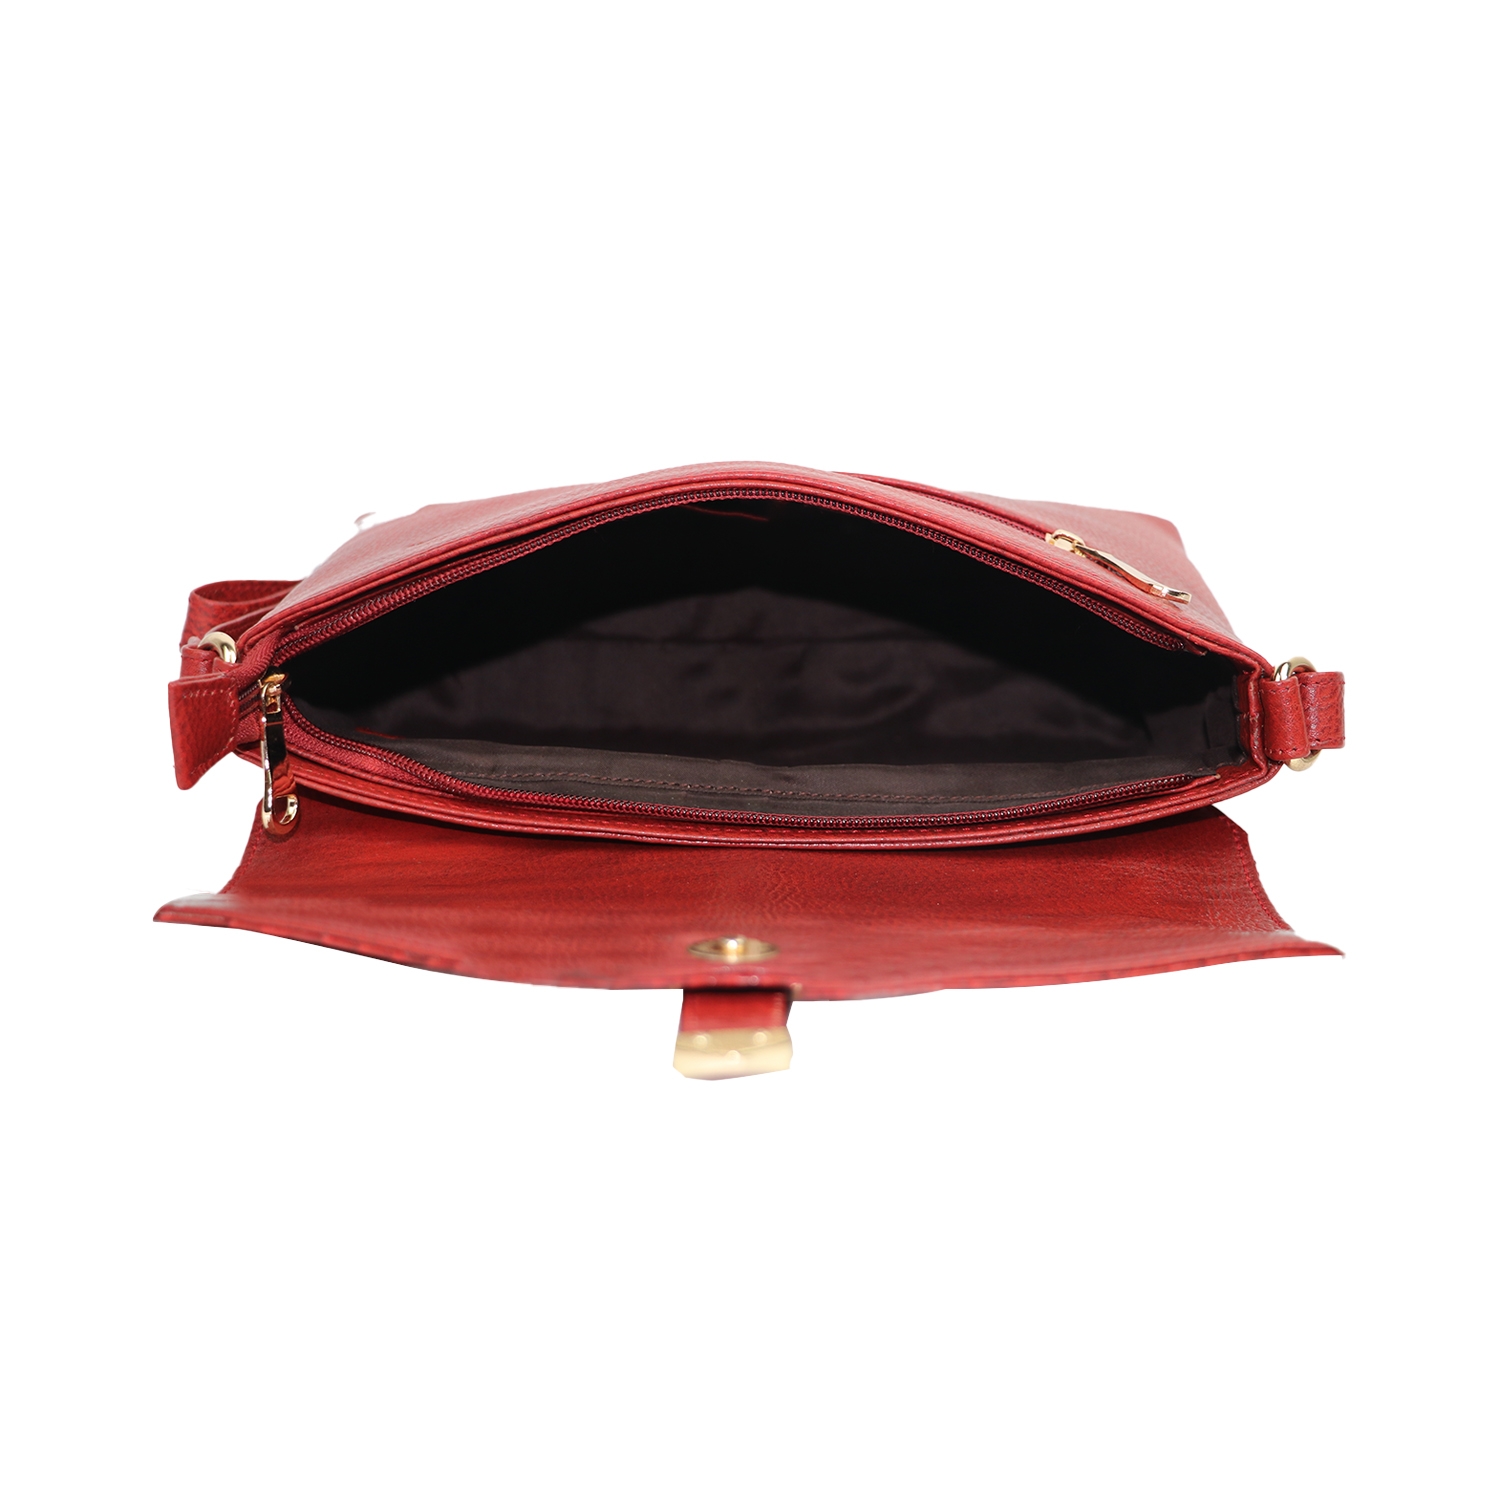 Fashion Crossbody Satchel Handbag | Crocodile Shoulder Bag | Brown